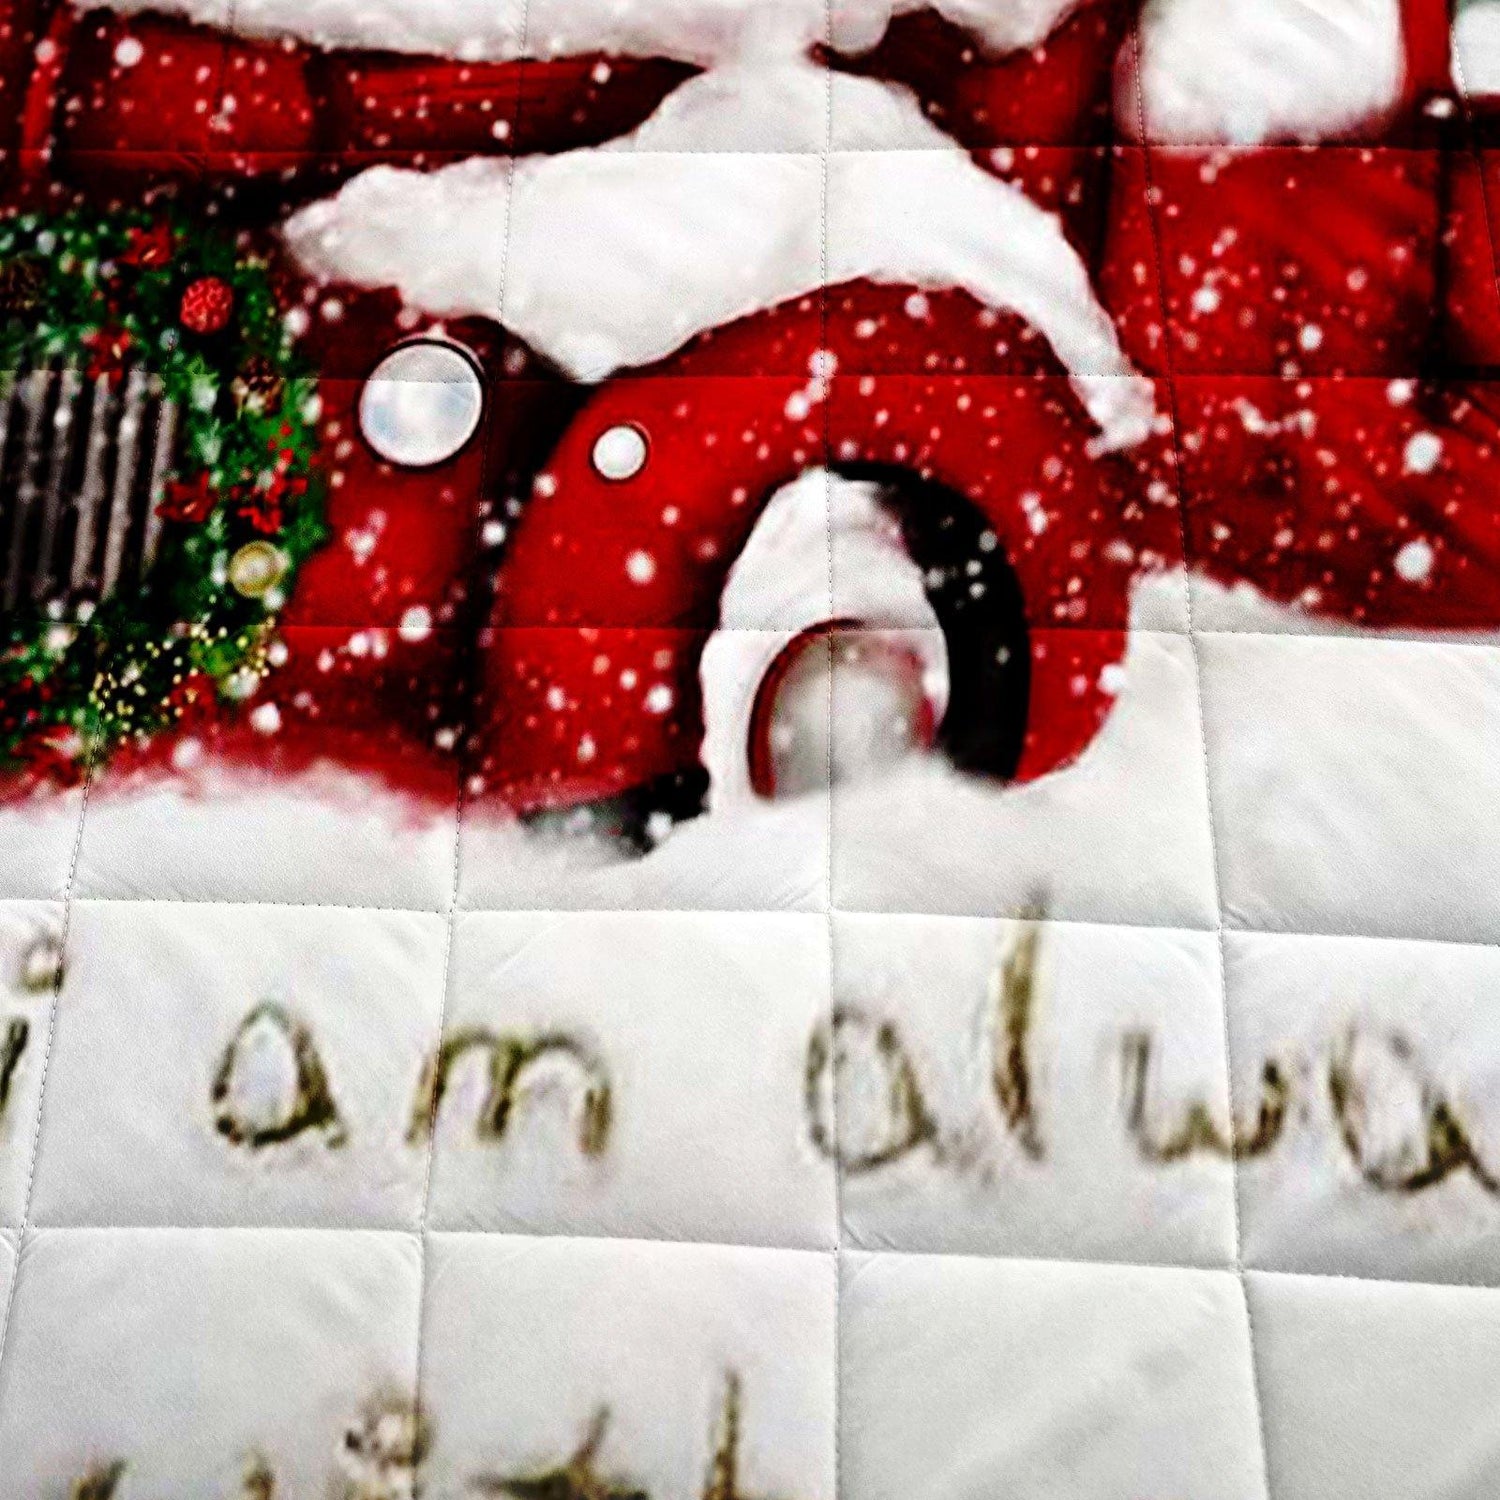 Wongs Bedding Christmas tree pattern quilt set - Beddinger